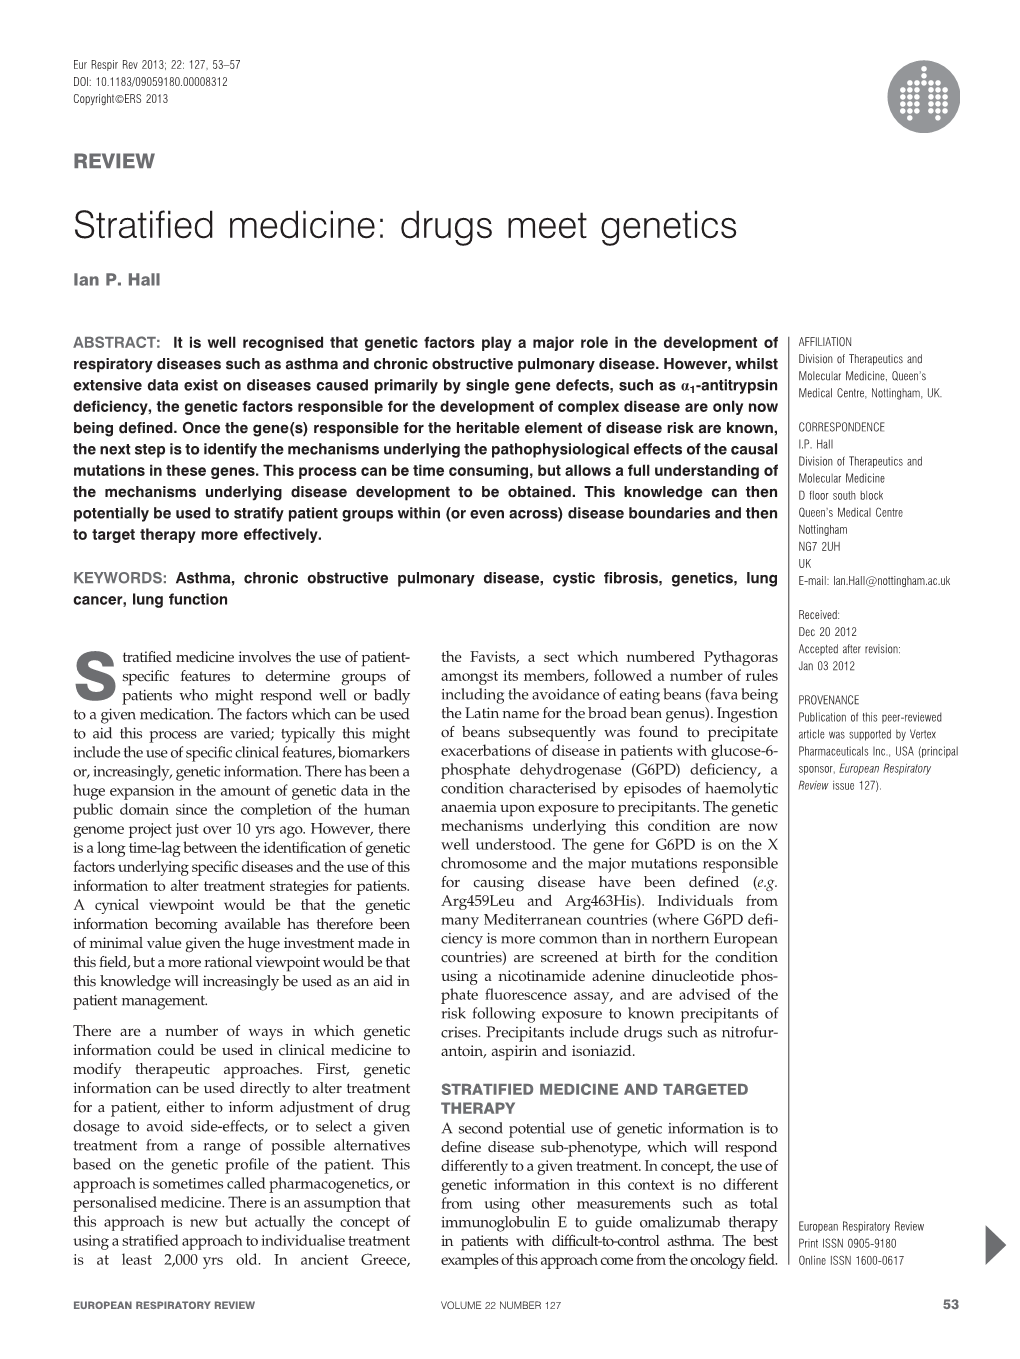 Stratified Medicine: Drugs Meet Genetics